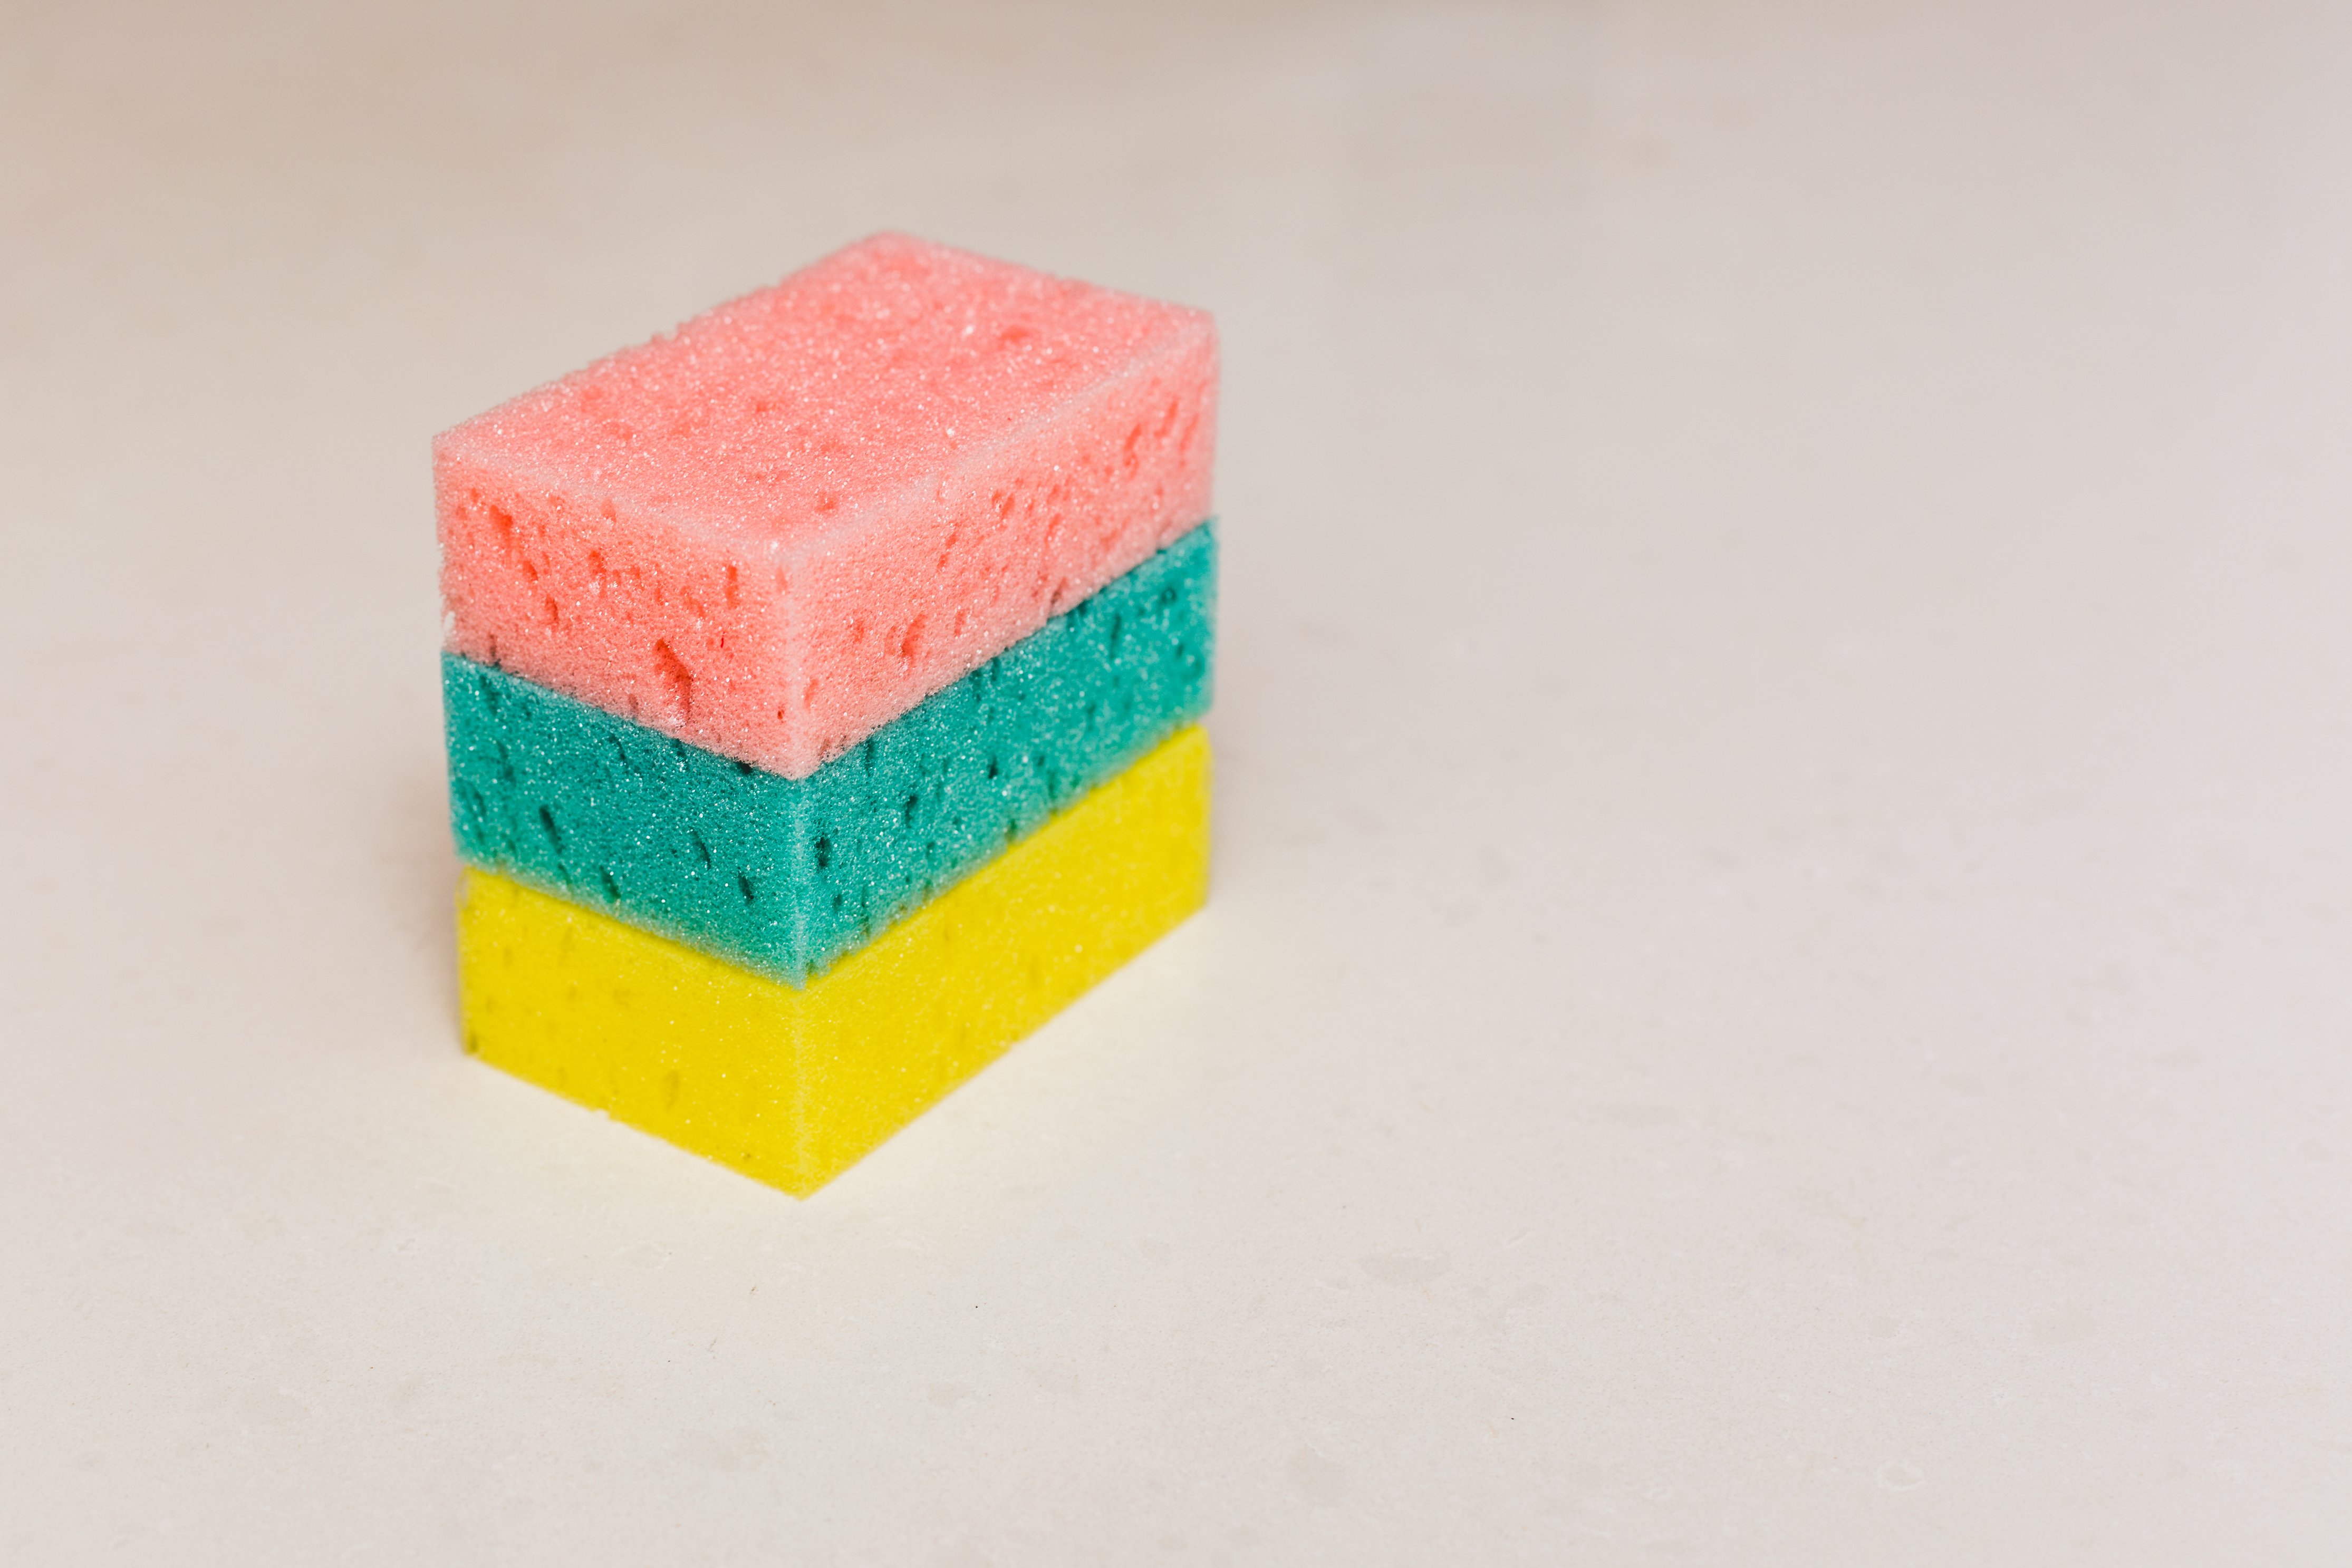 how long do you microwave a sponge for